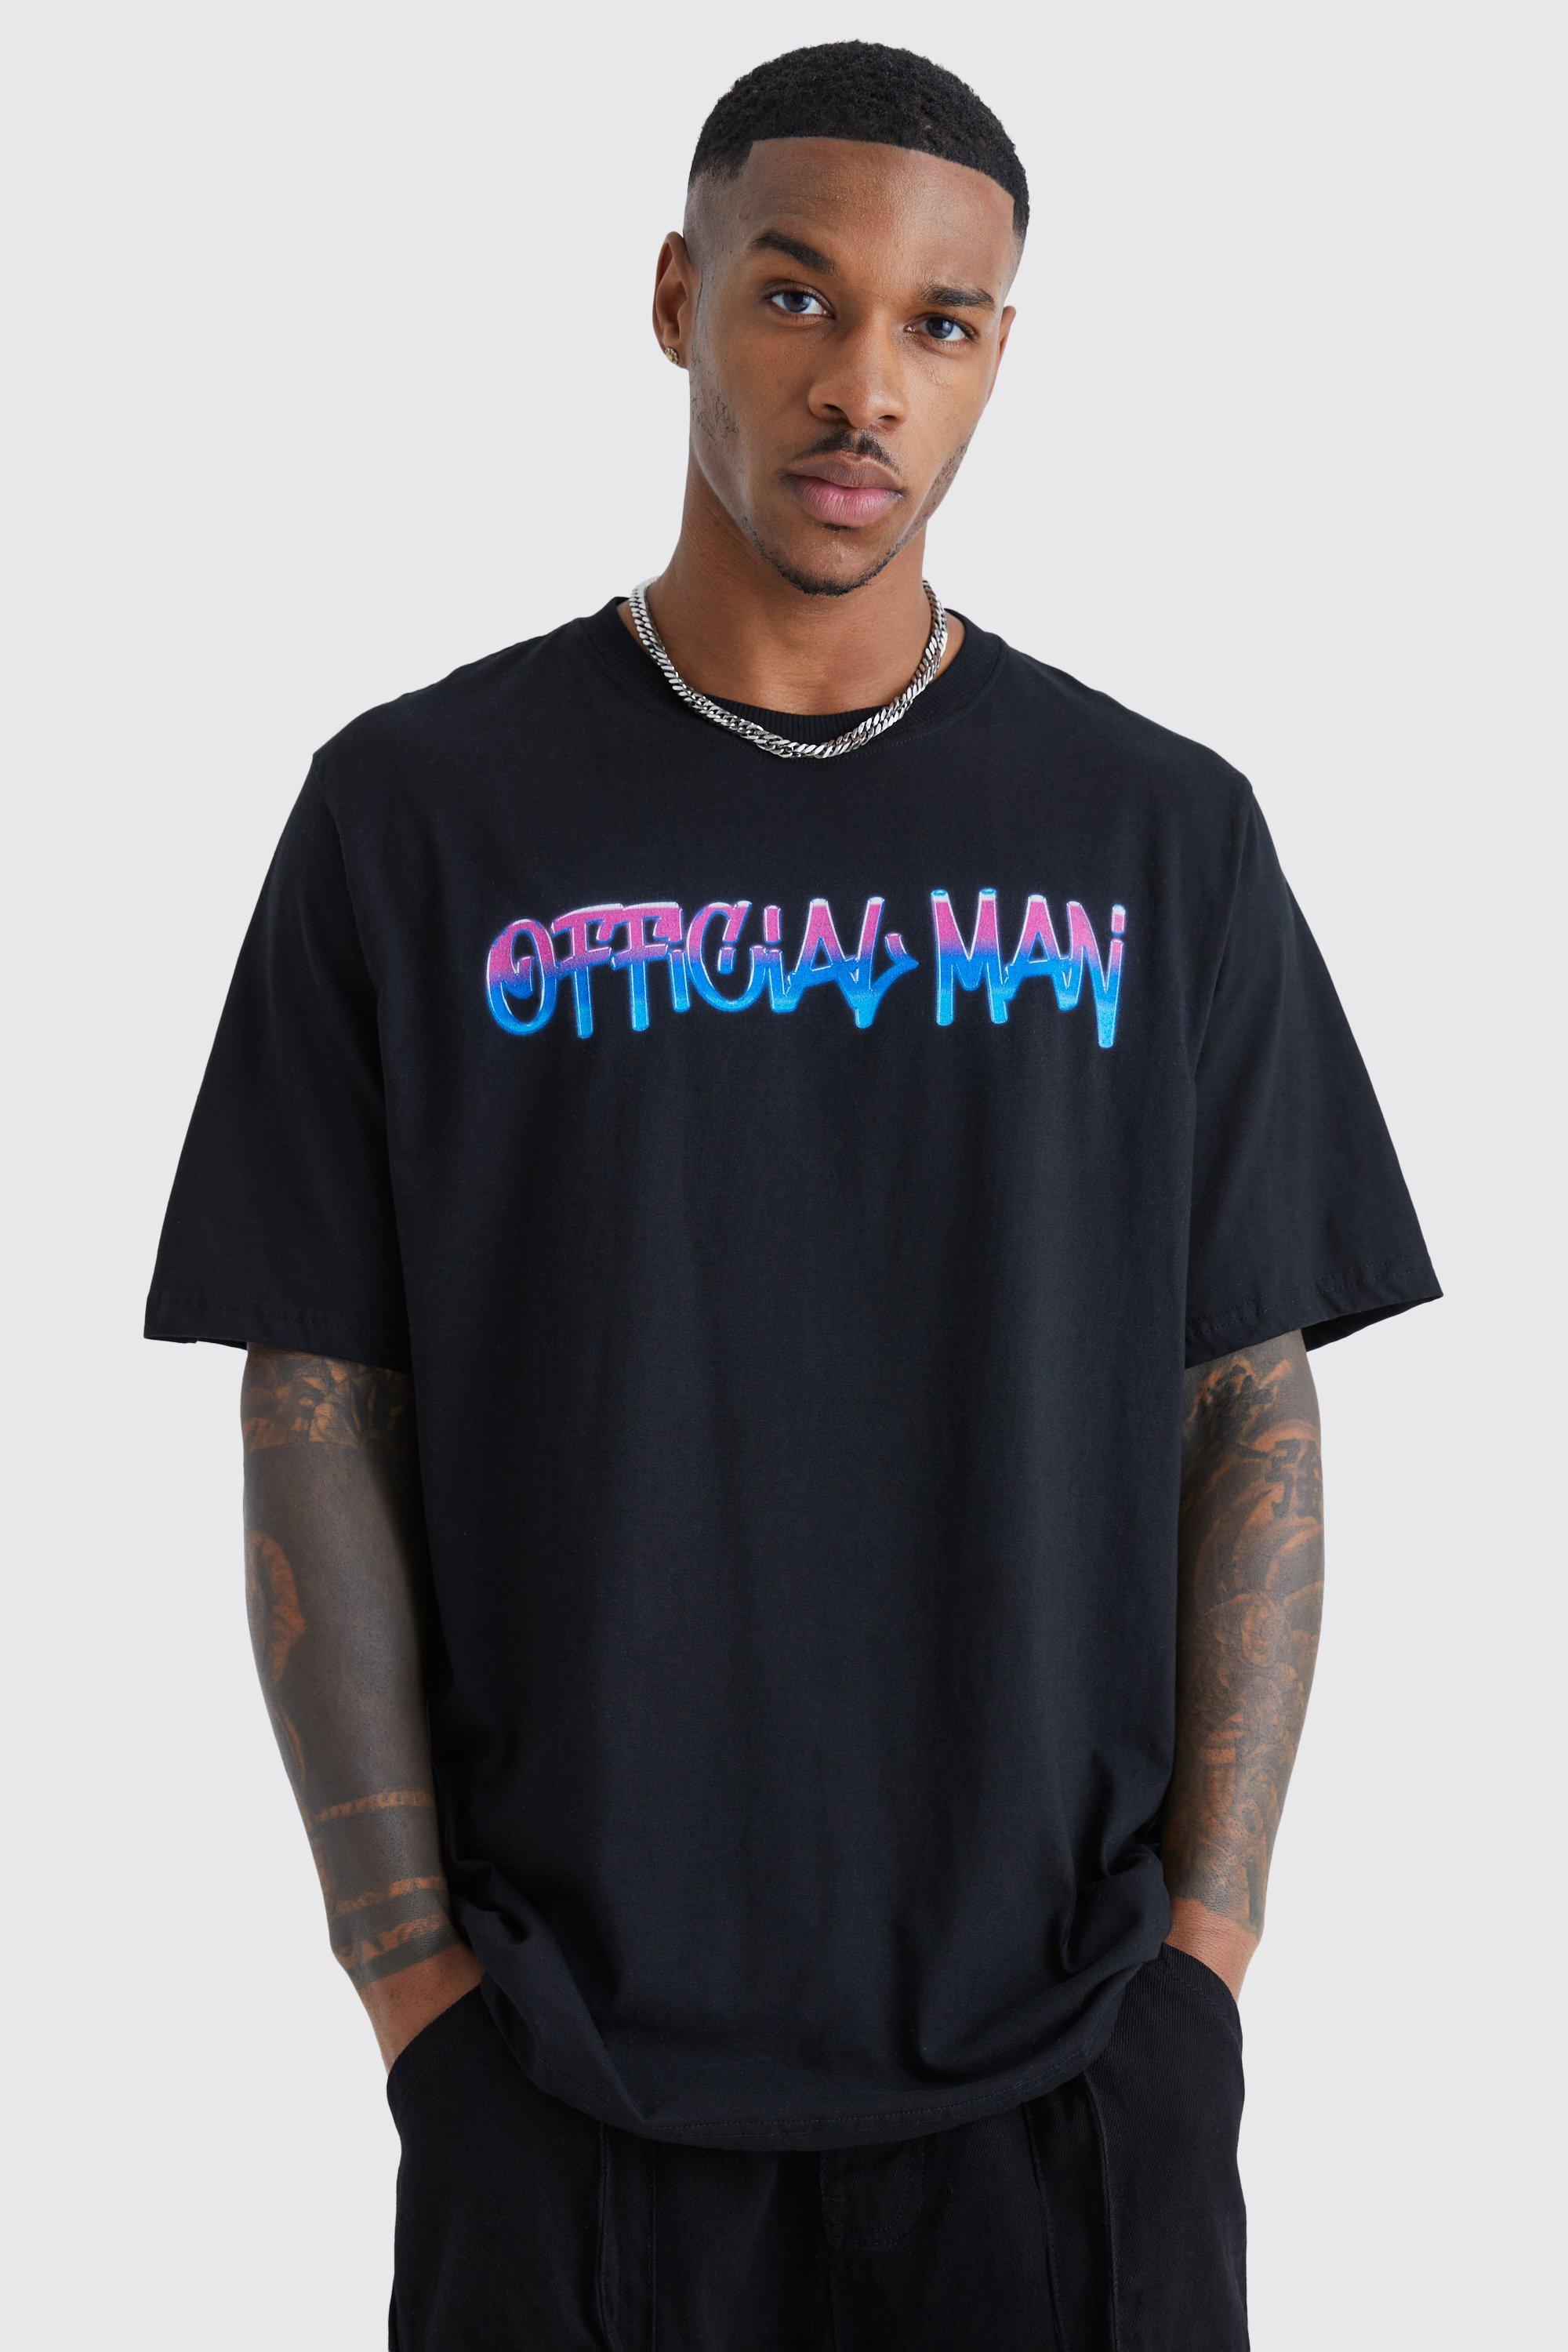 Mens Black Oversized Ombre Official Man Print T-shirt, Black